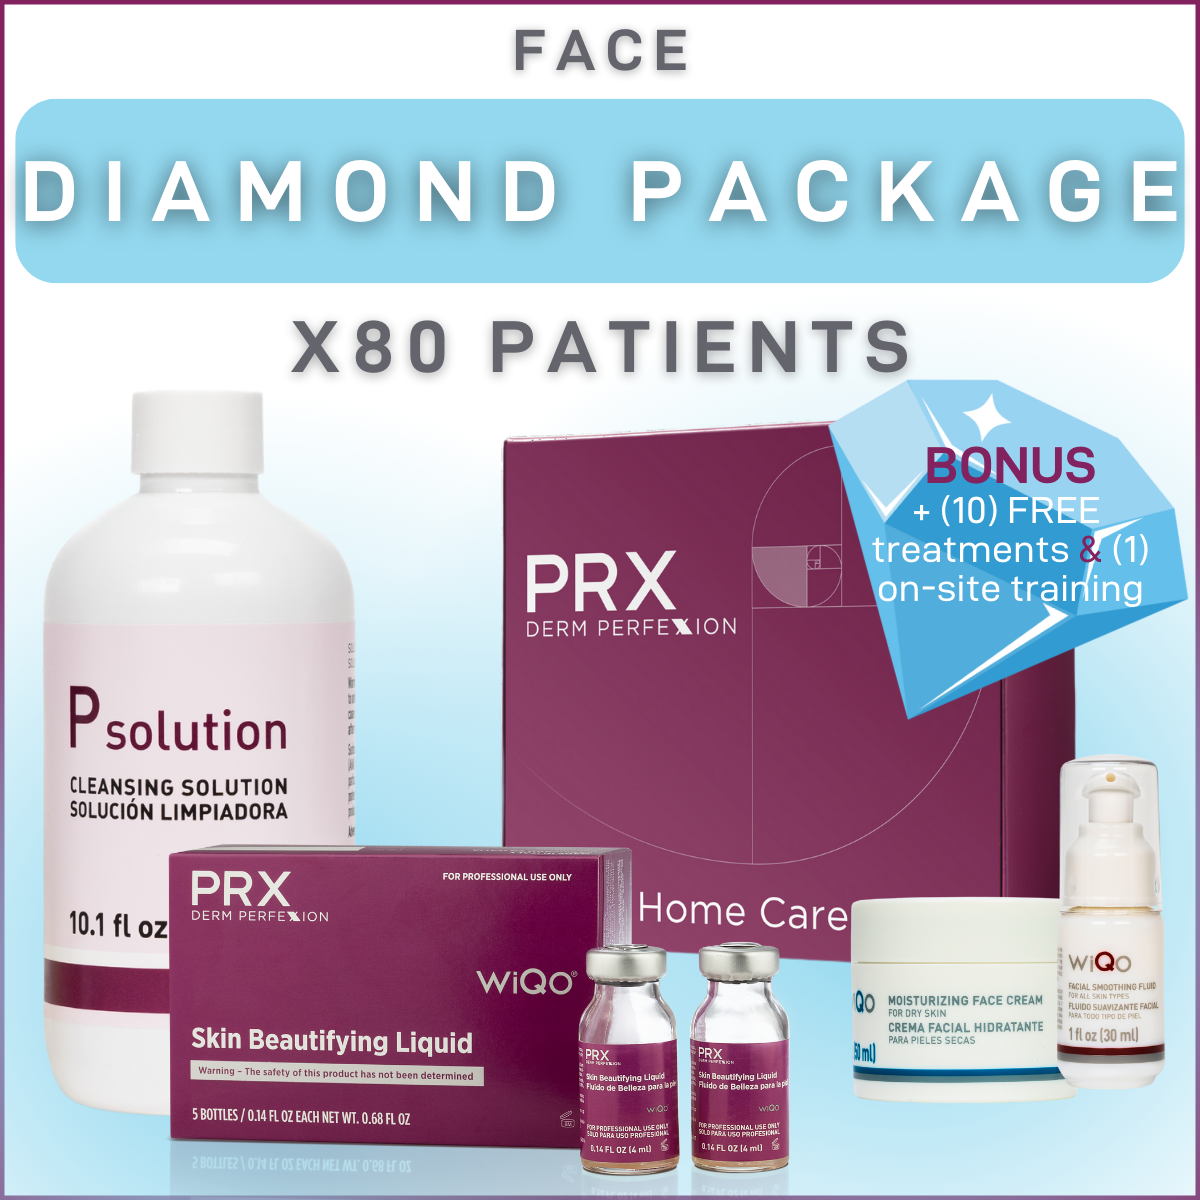 PRX DERM PERFEXION - Diamond Package (FACE)